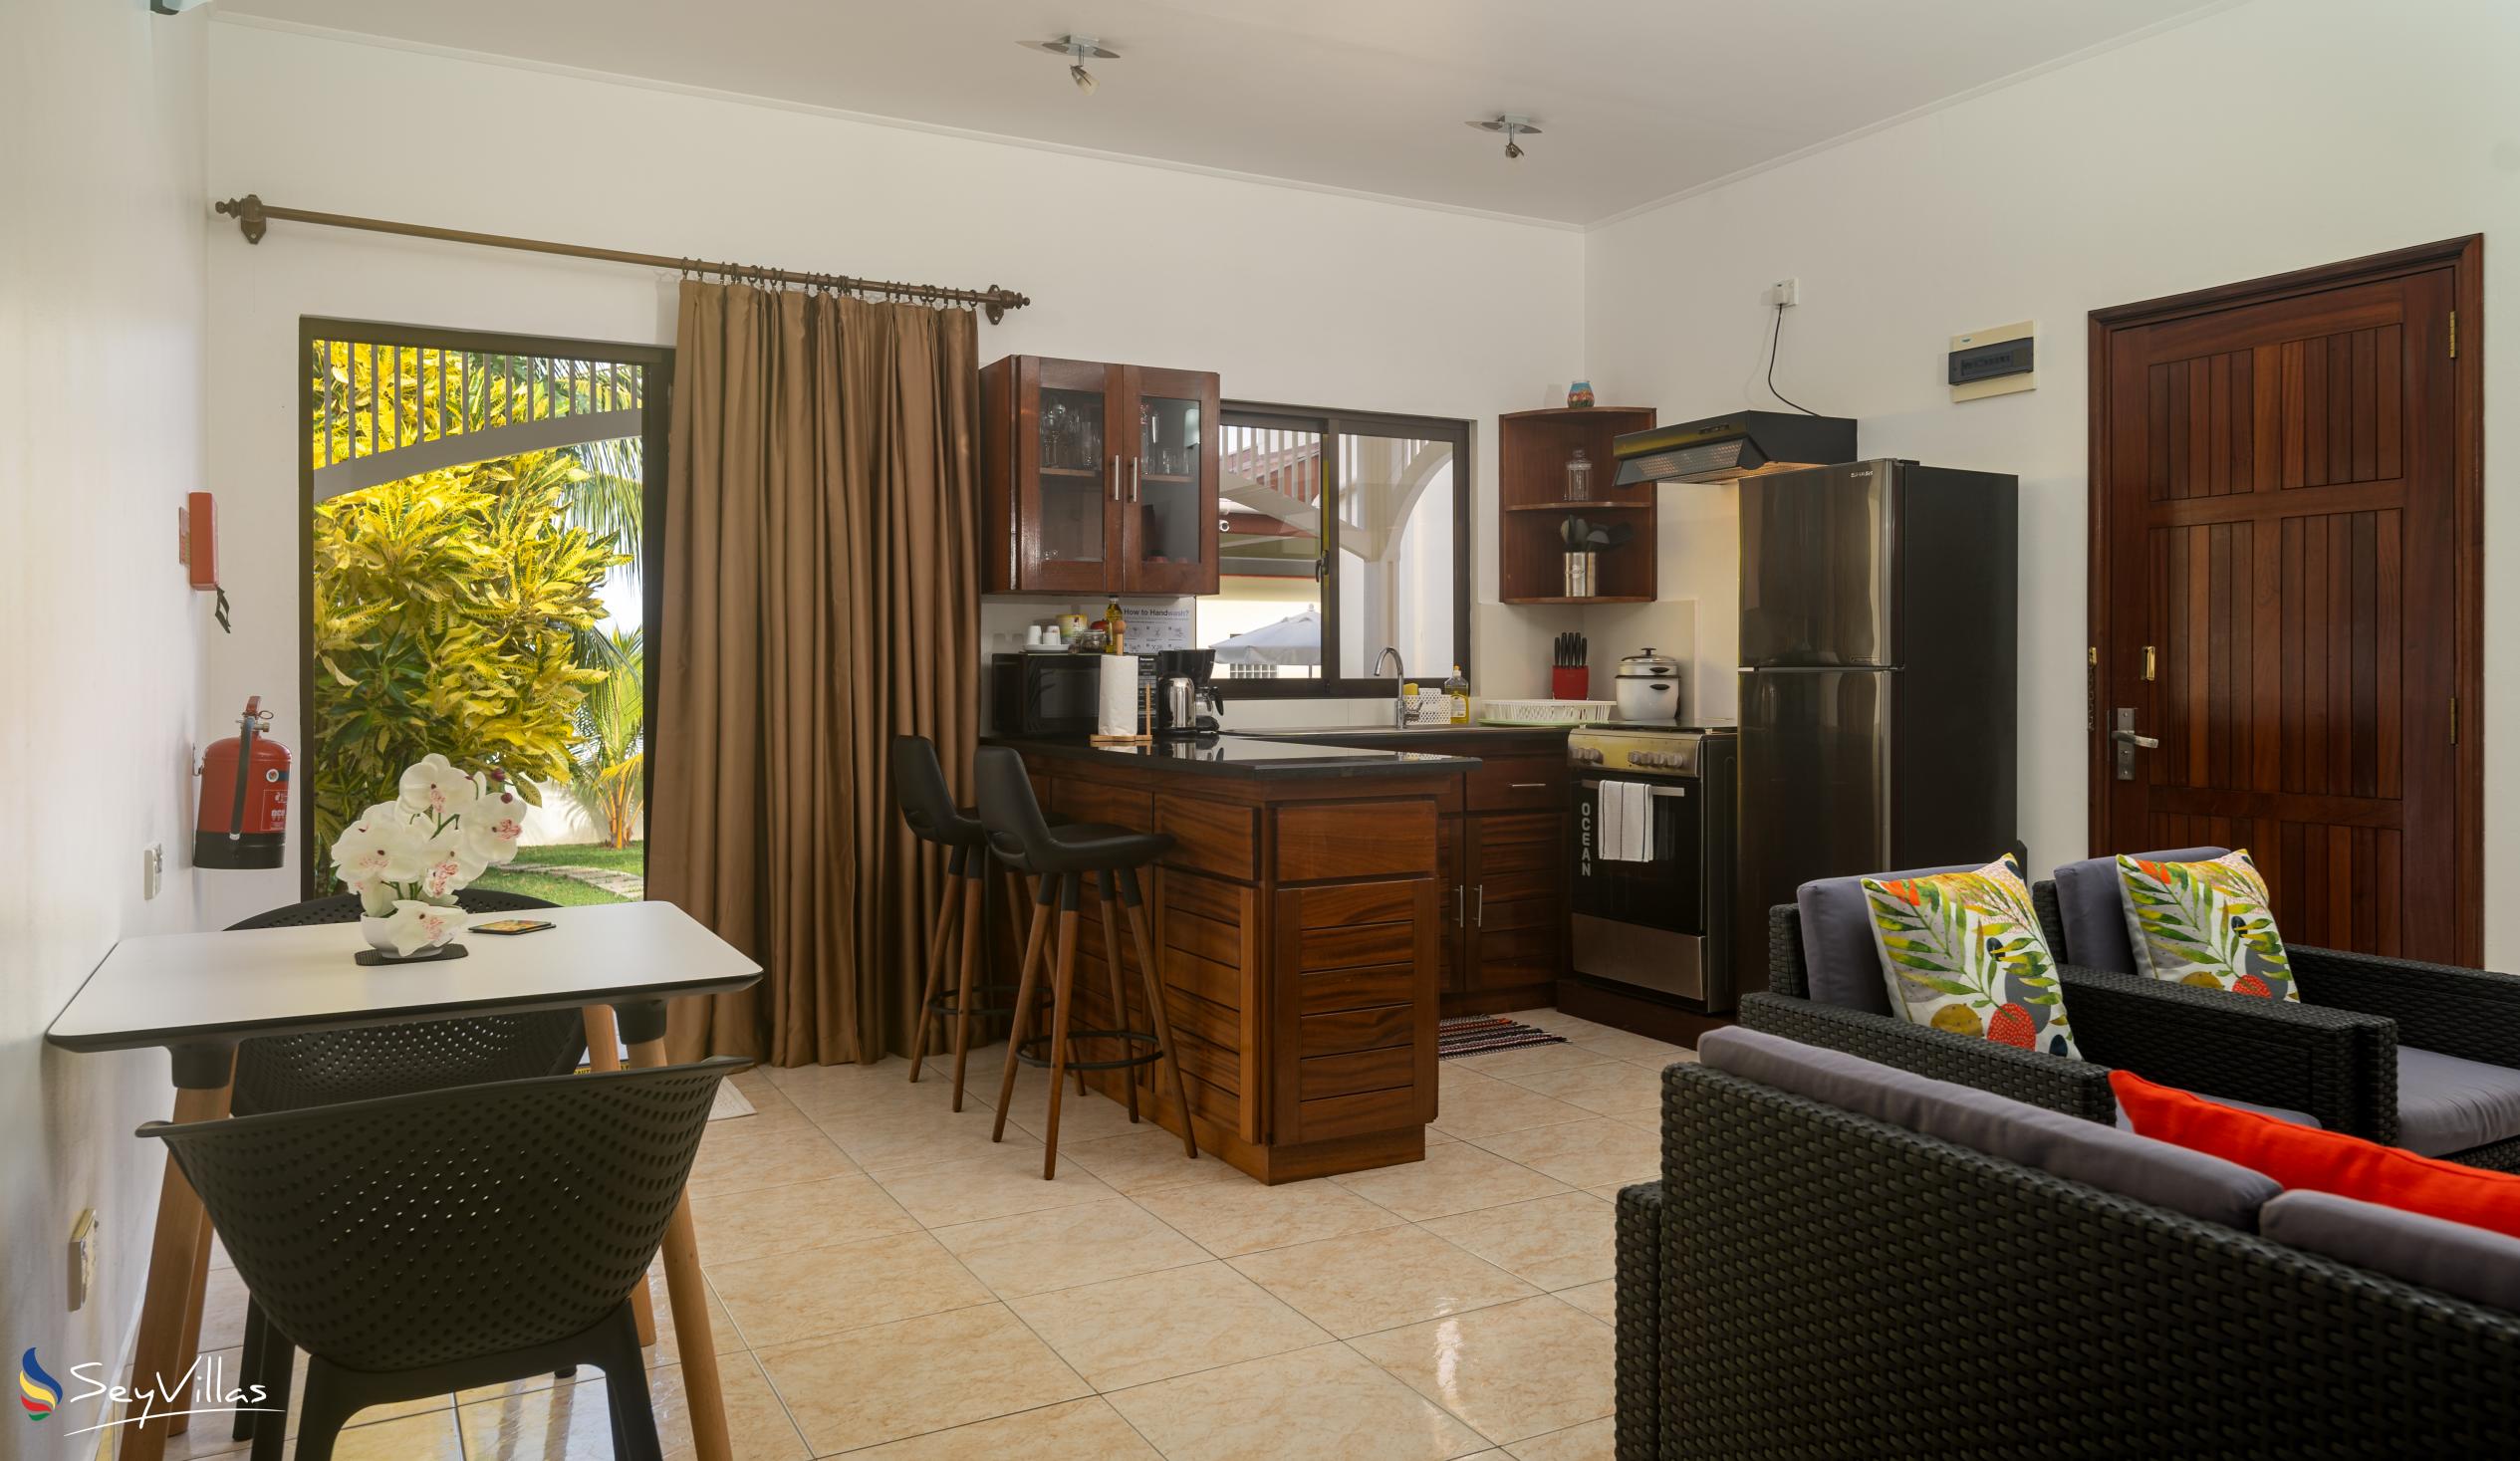 Foto 53: Emma's Guest House and Self-Catering - Villa con 1 camera - Mahé (Seychelles)